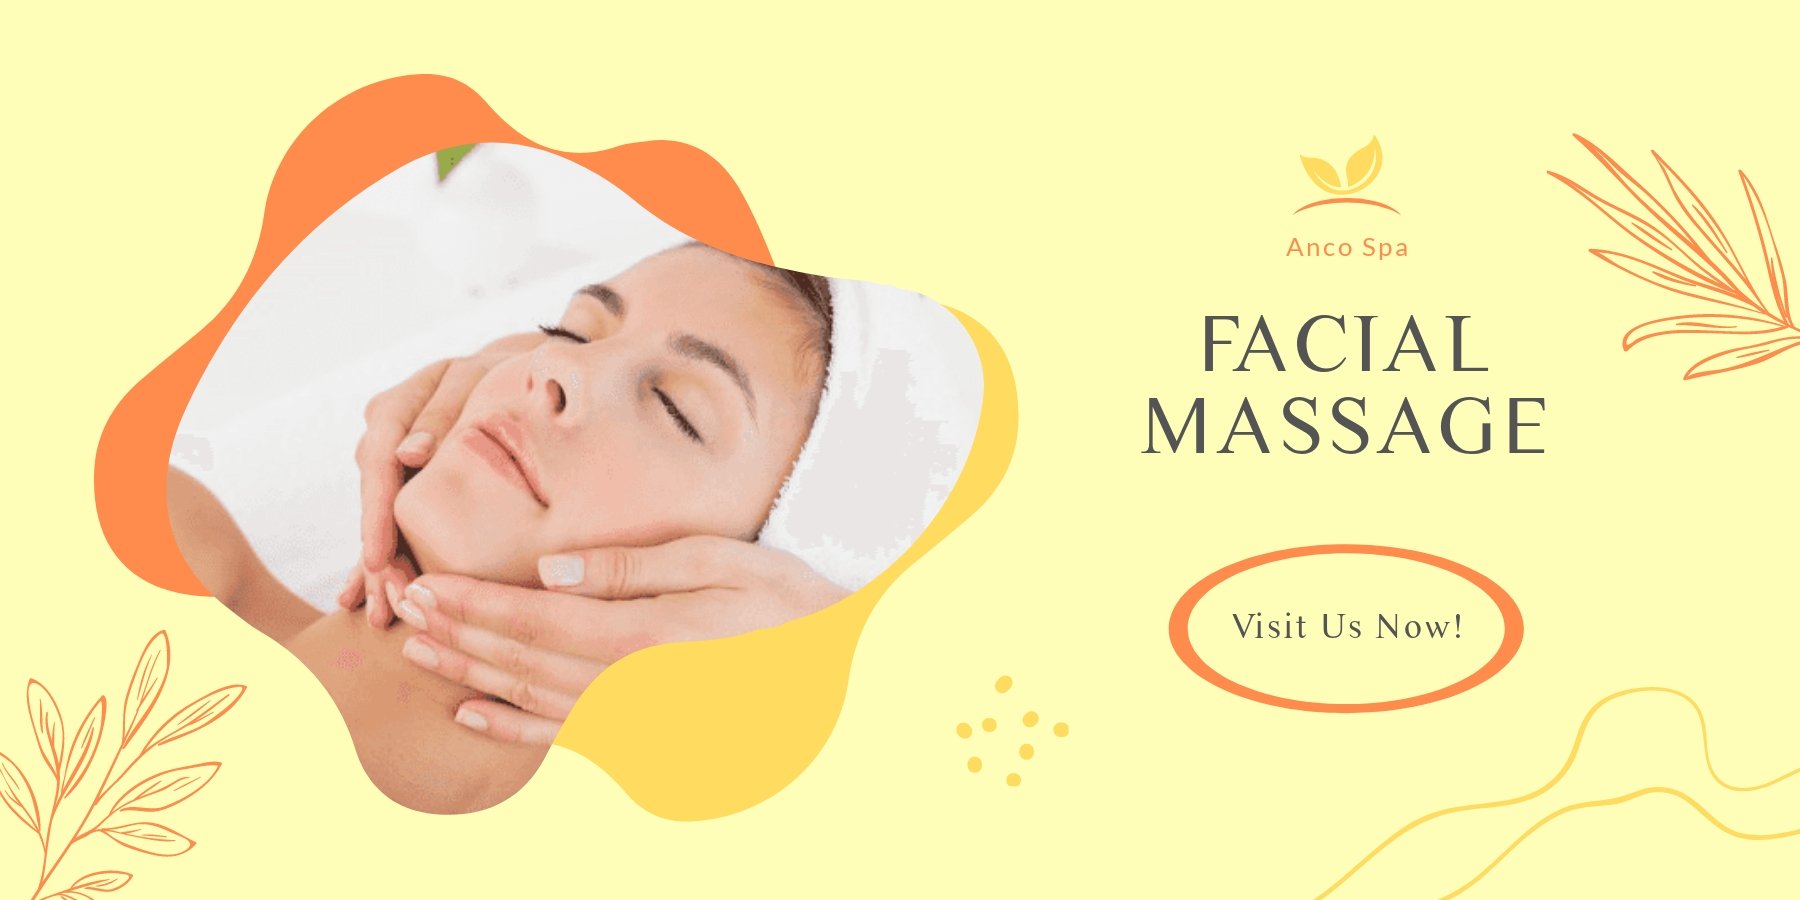 Free Facial Massage Banner Template